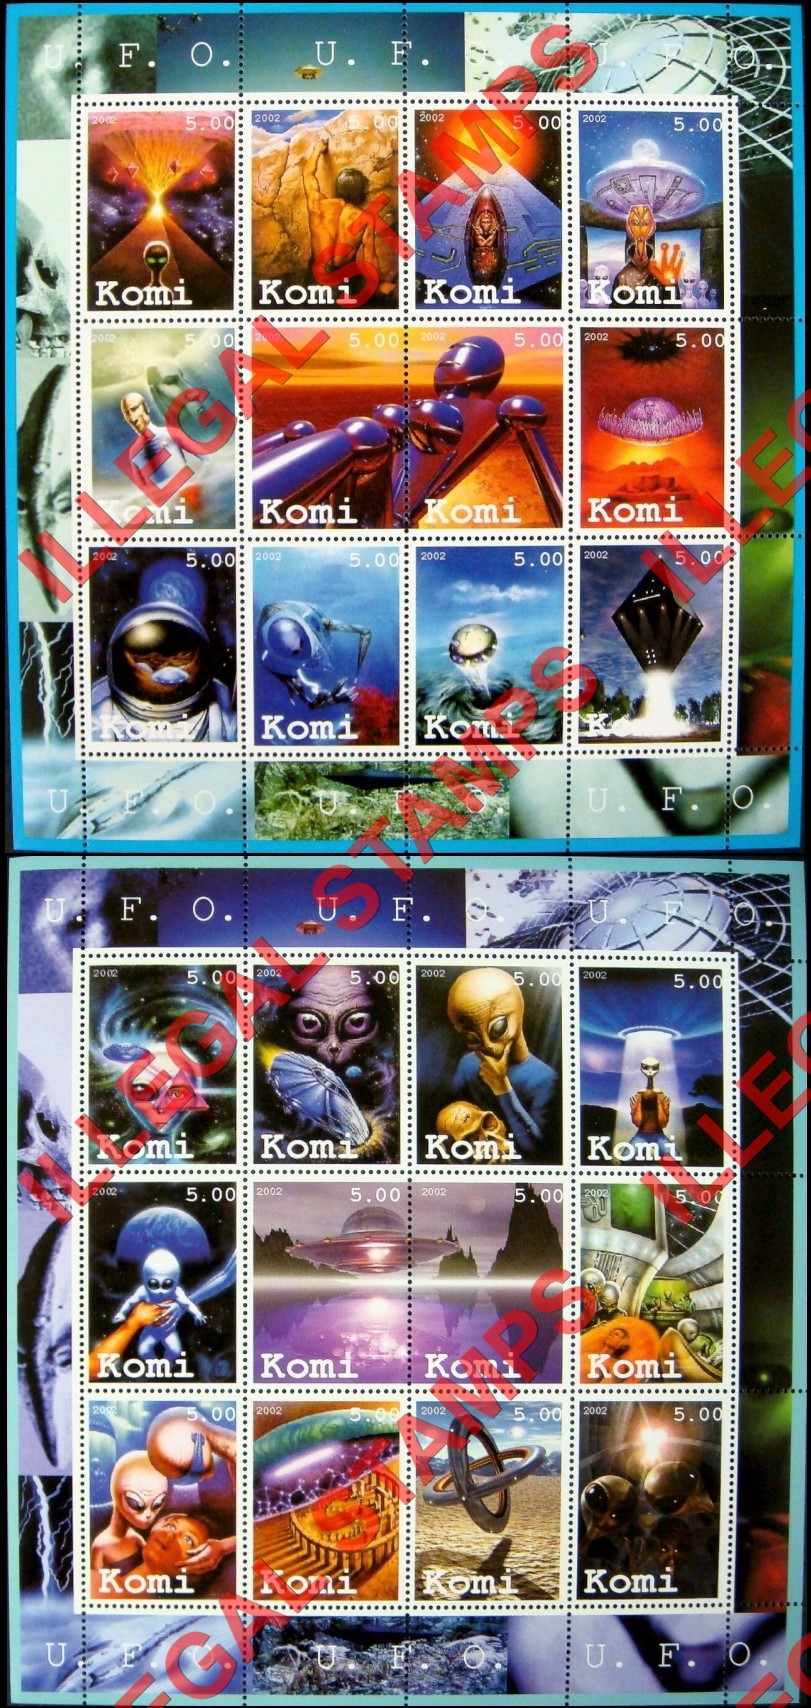 Komi Republic 2002 Counterfeit Illegal Stamps (Part 1)